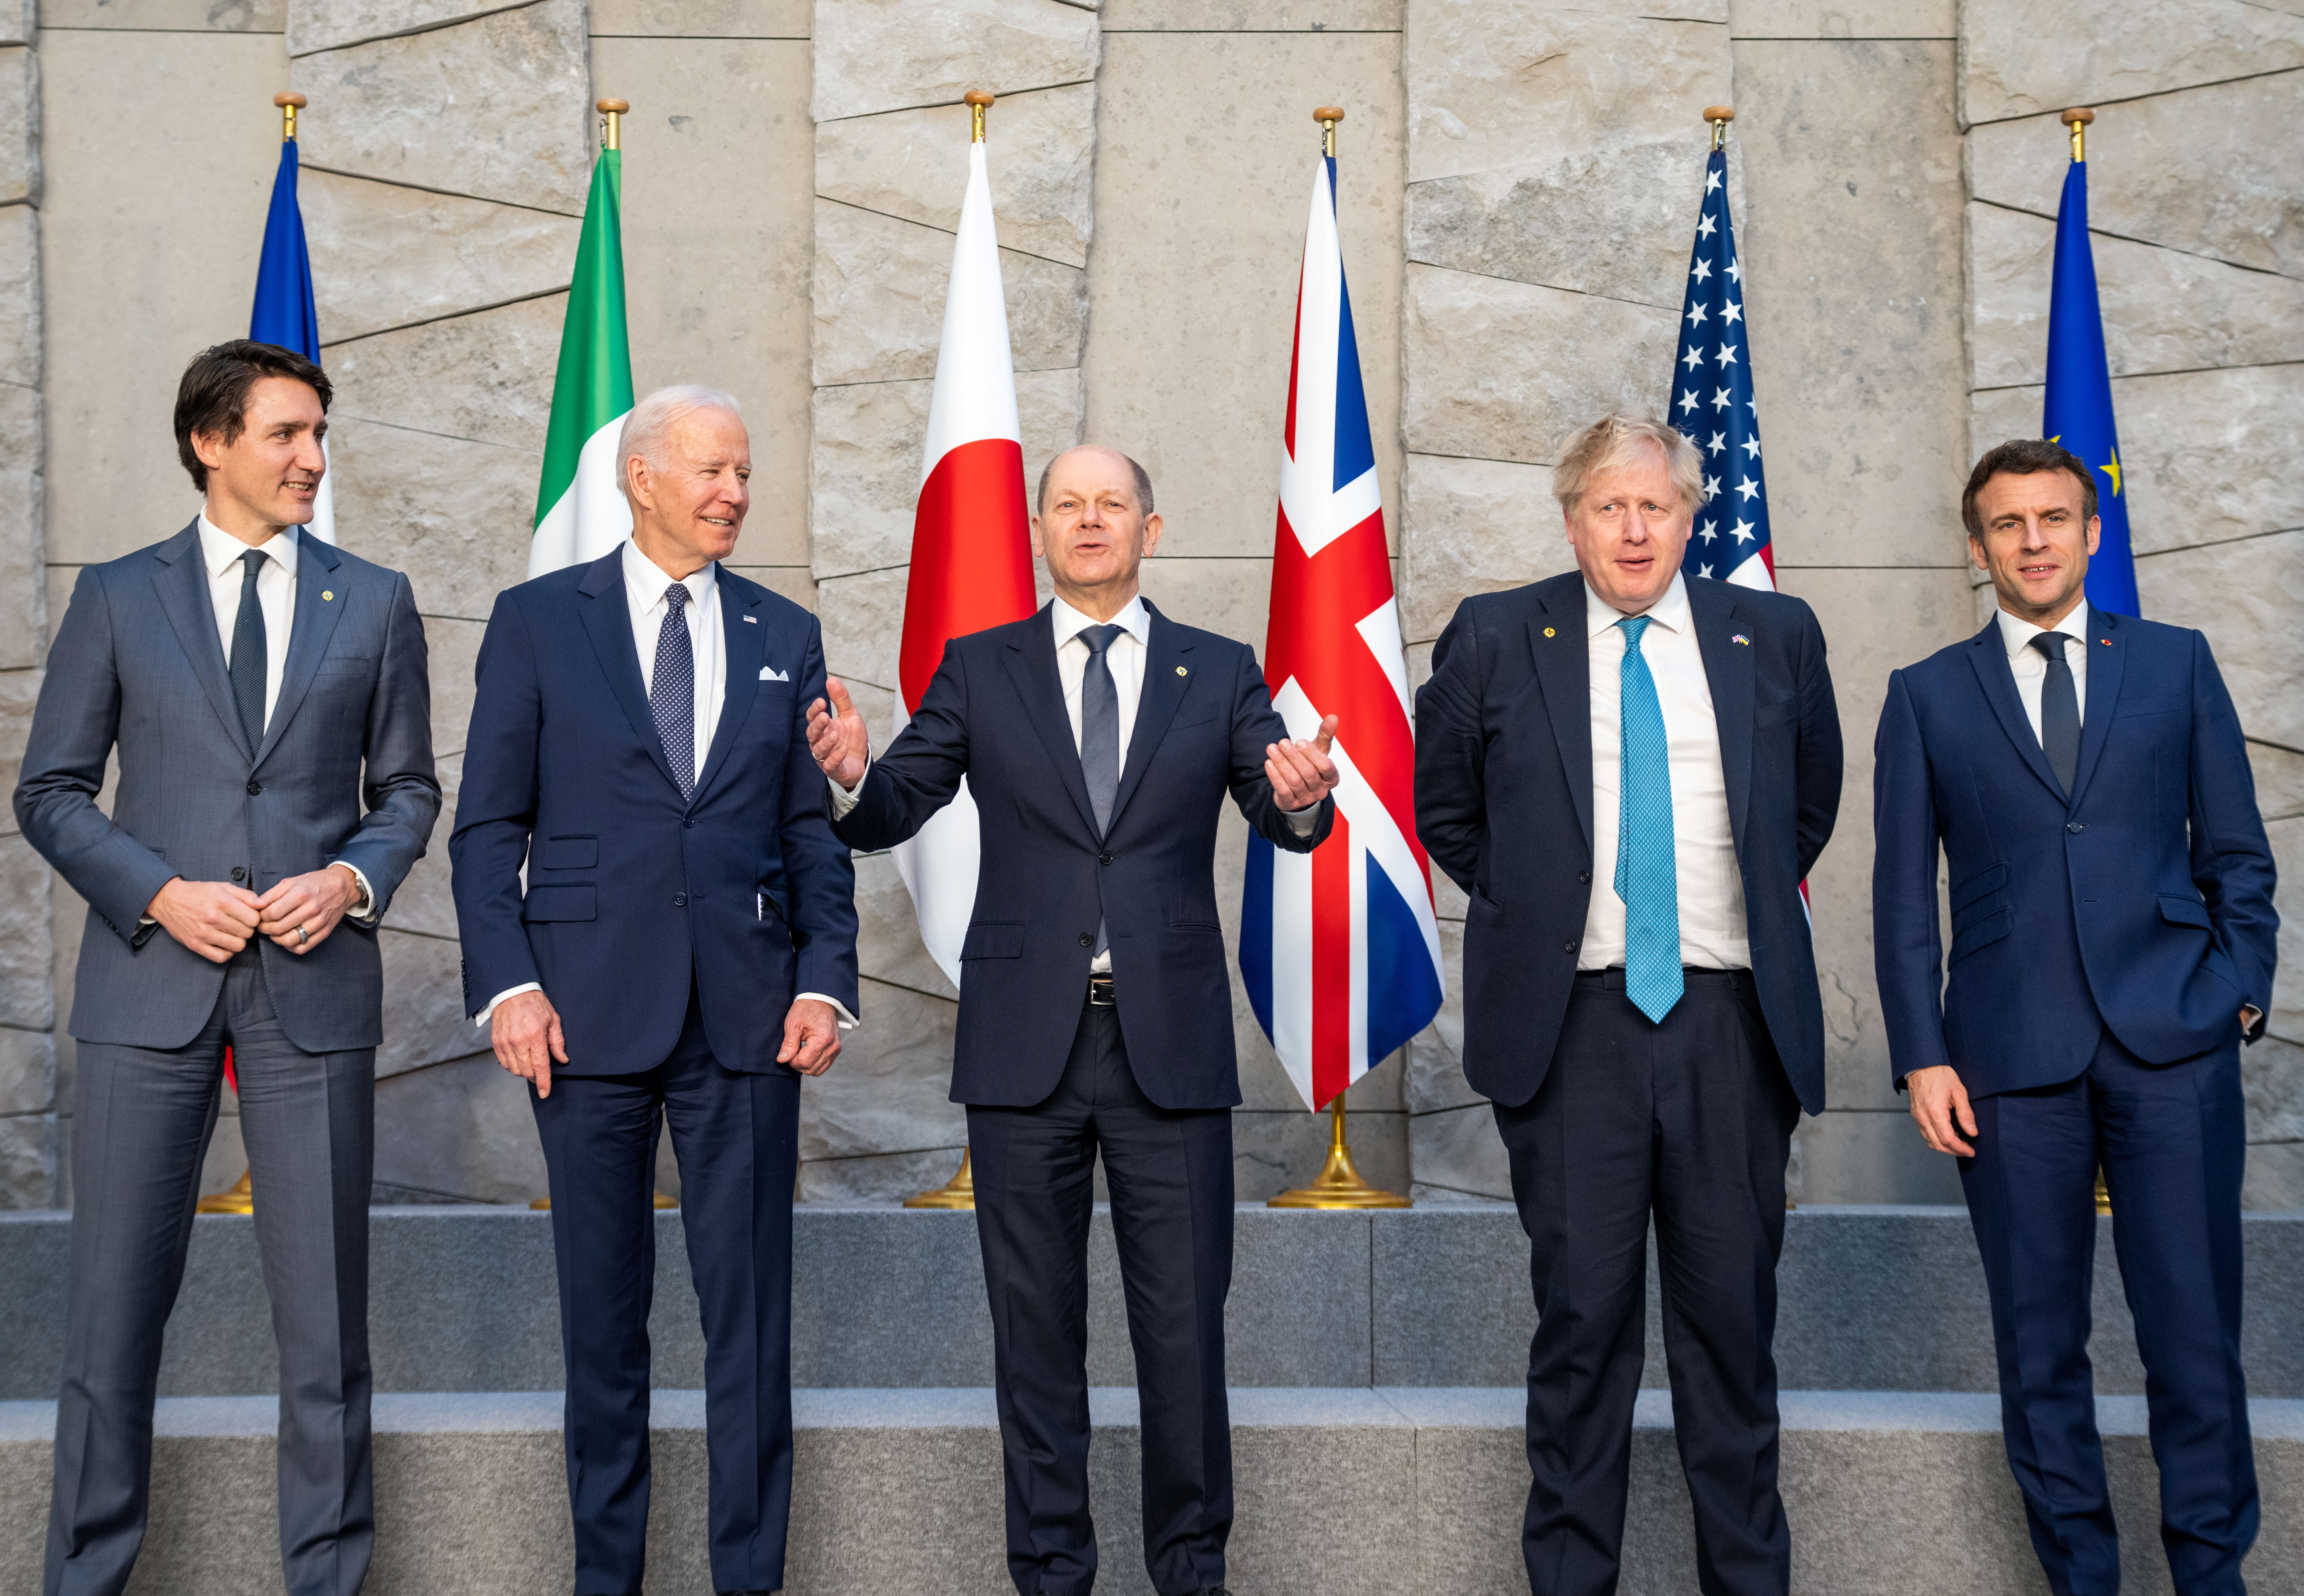 G7 summit in Brussels